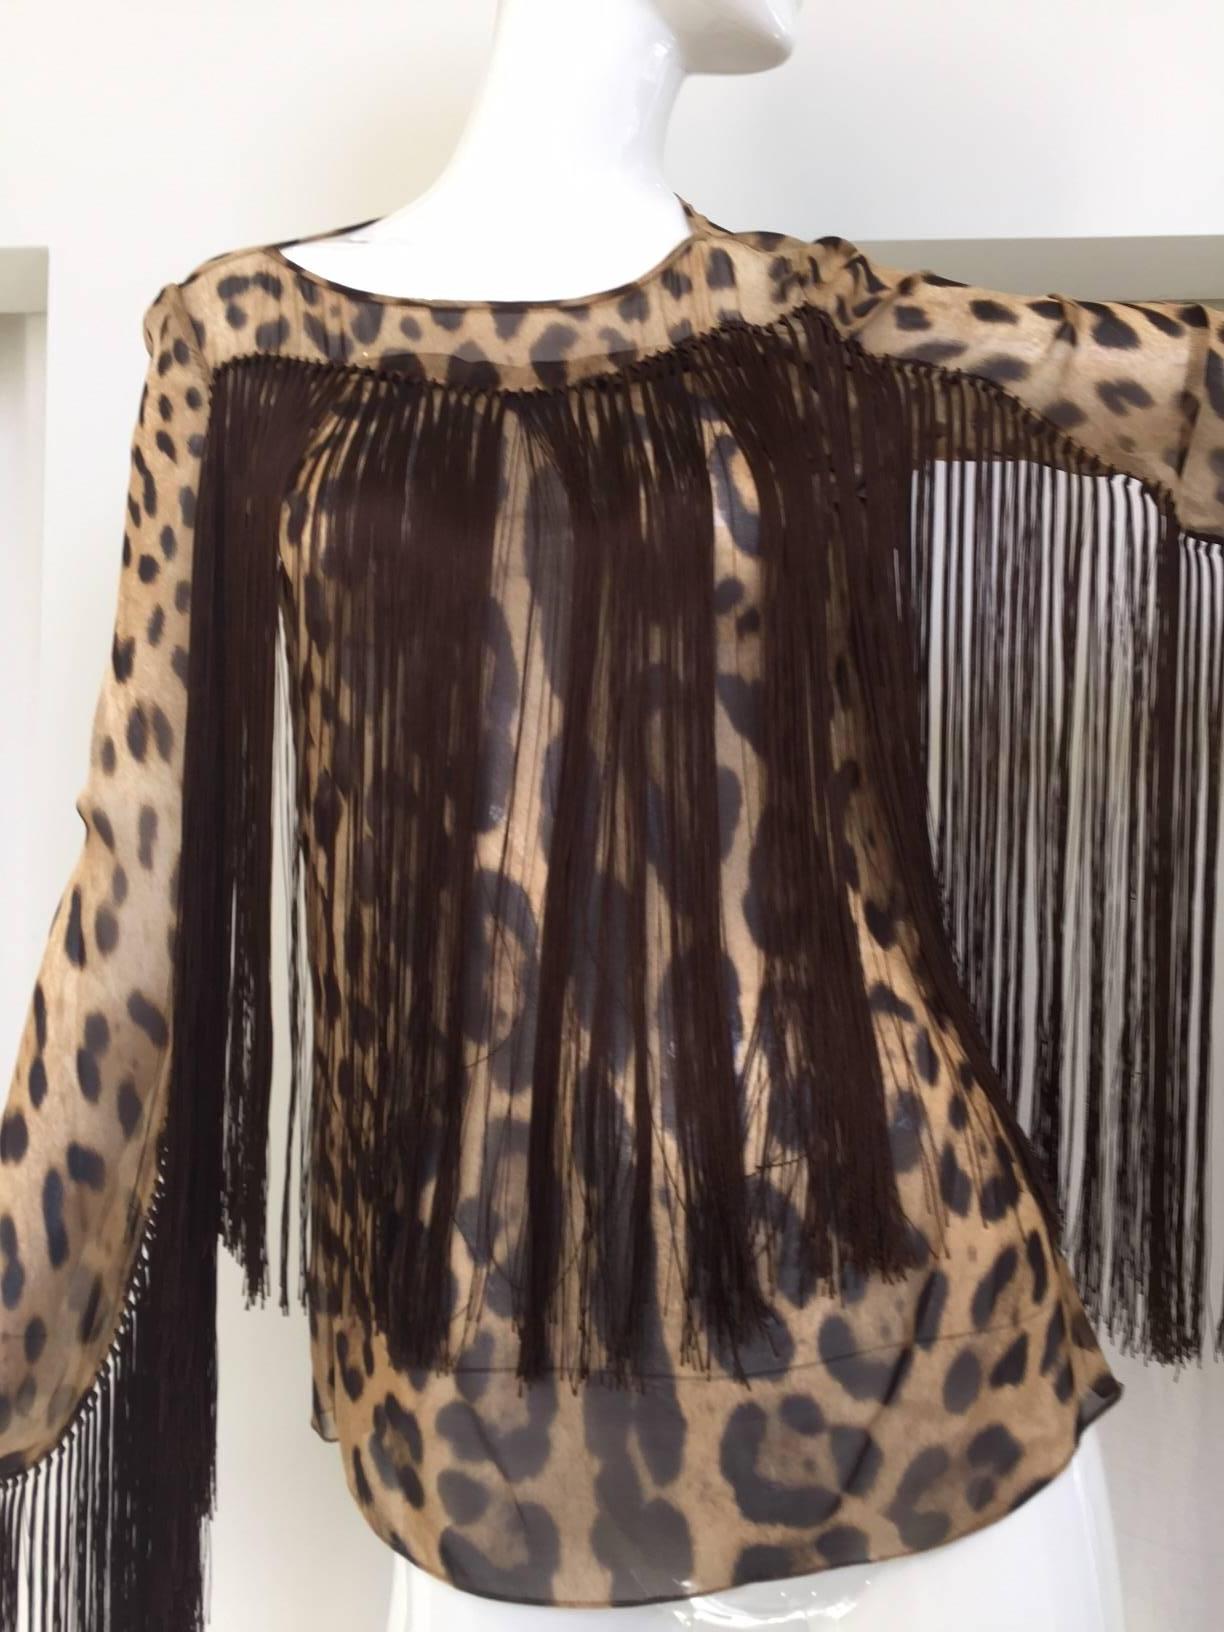 DOLCE & GABBANA  leopard print silk fringe blouse.
Size: 38
Bust: 34